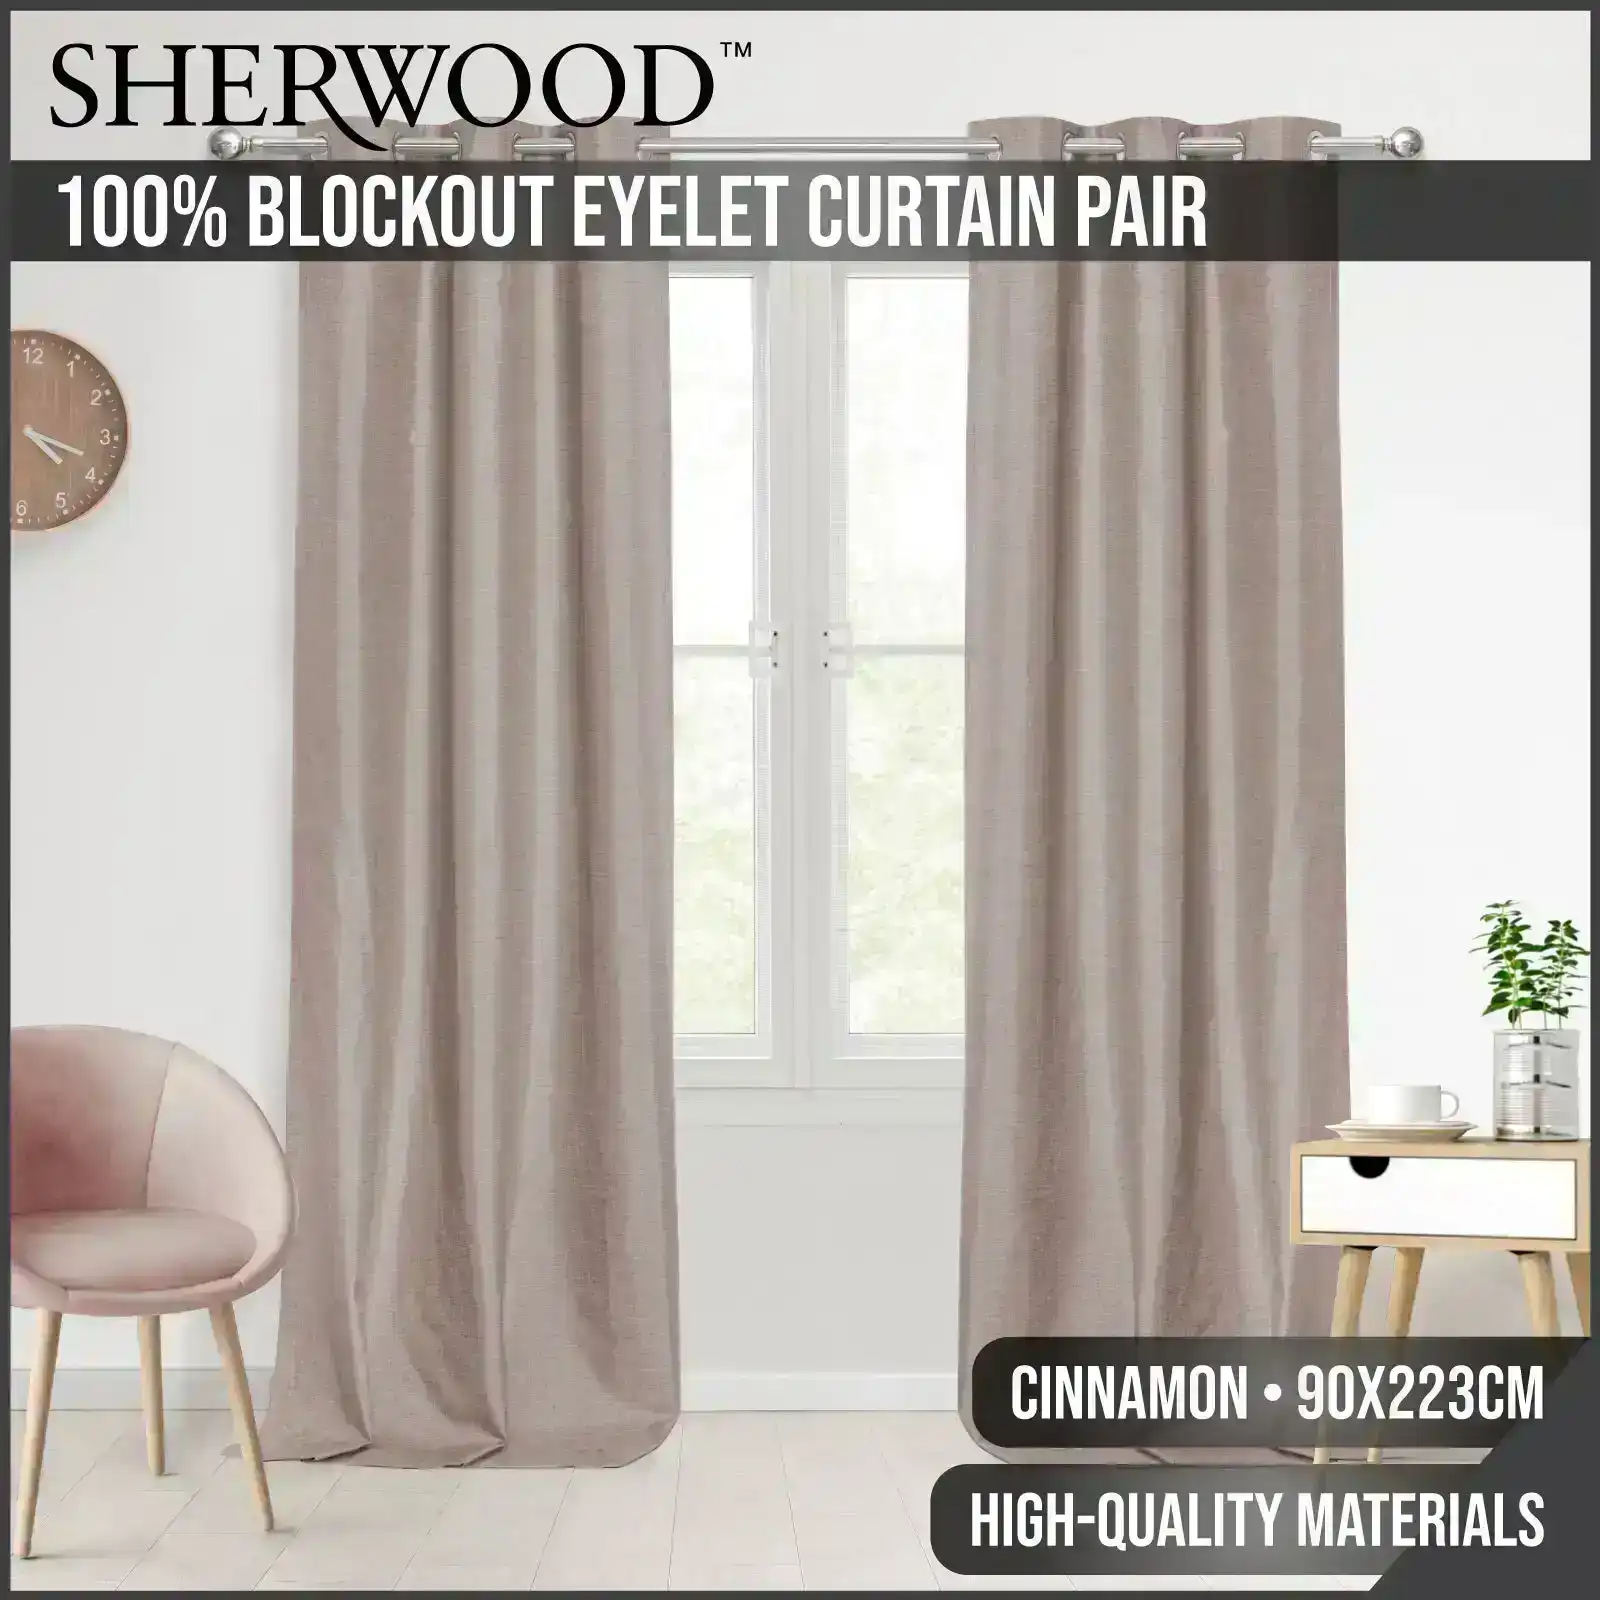 Sherwood Home 100% Blockout Eyelet Curtain Pair Cinnamon 90x223cm